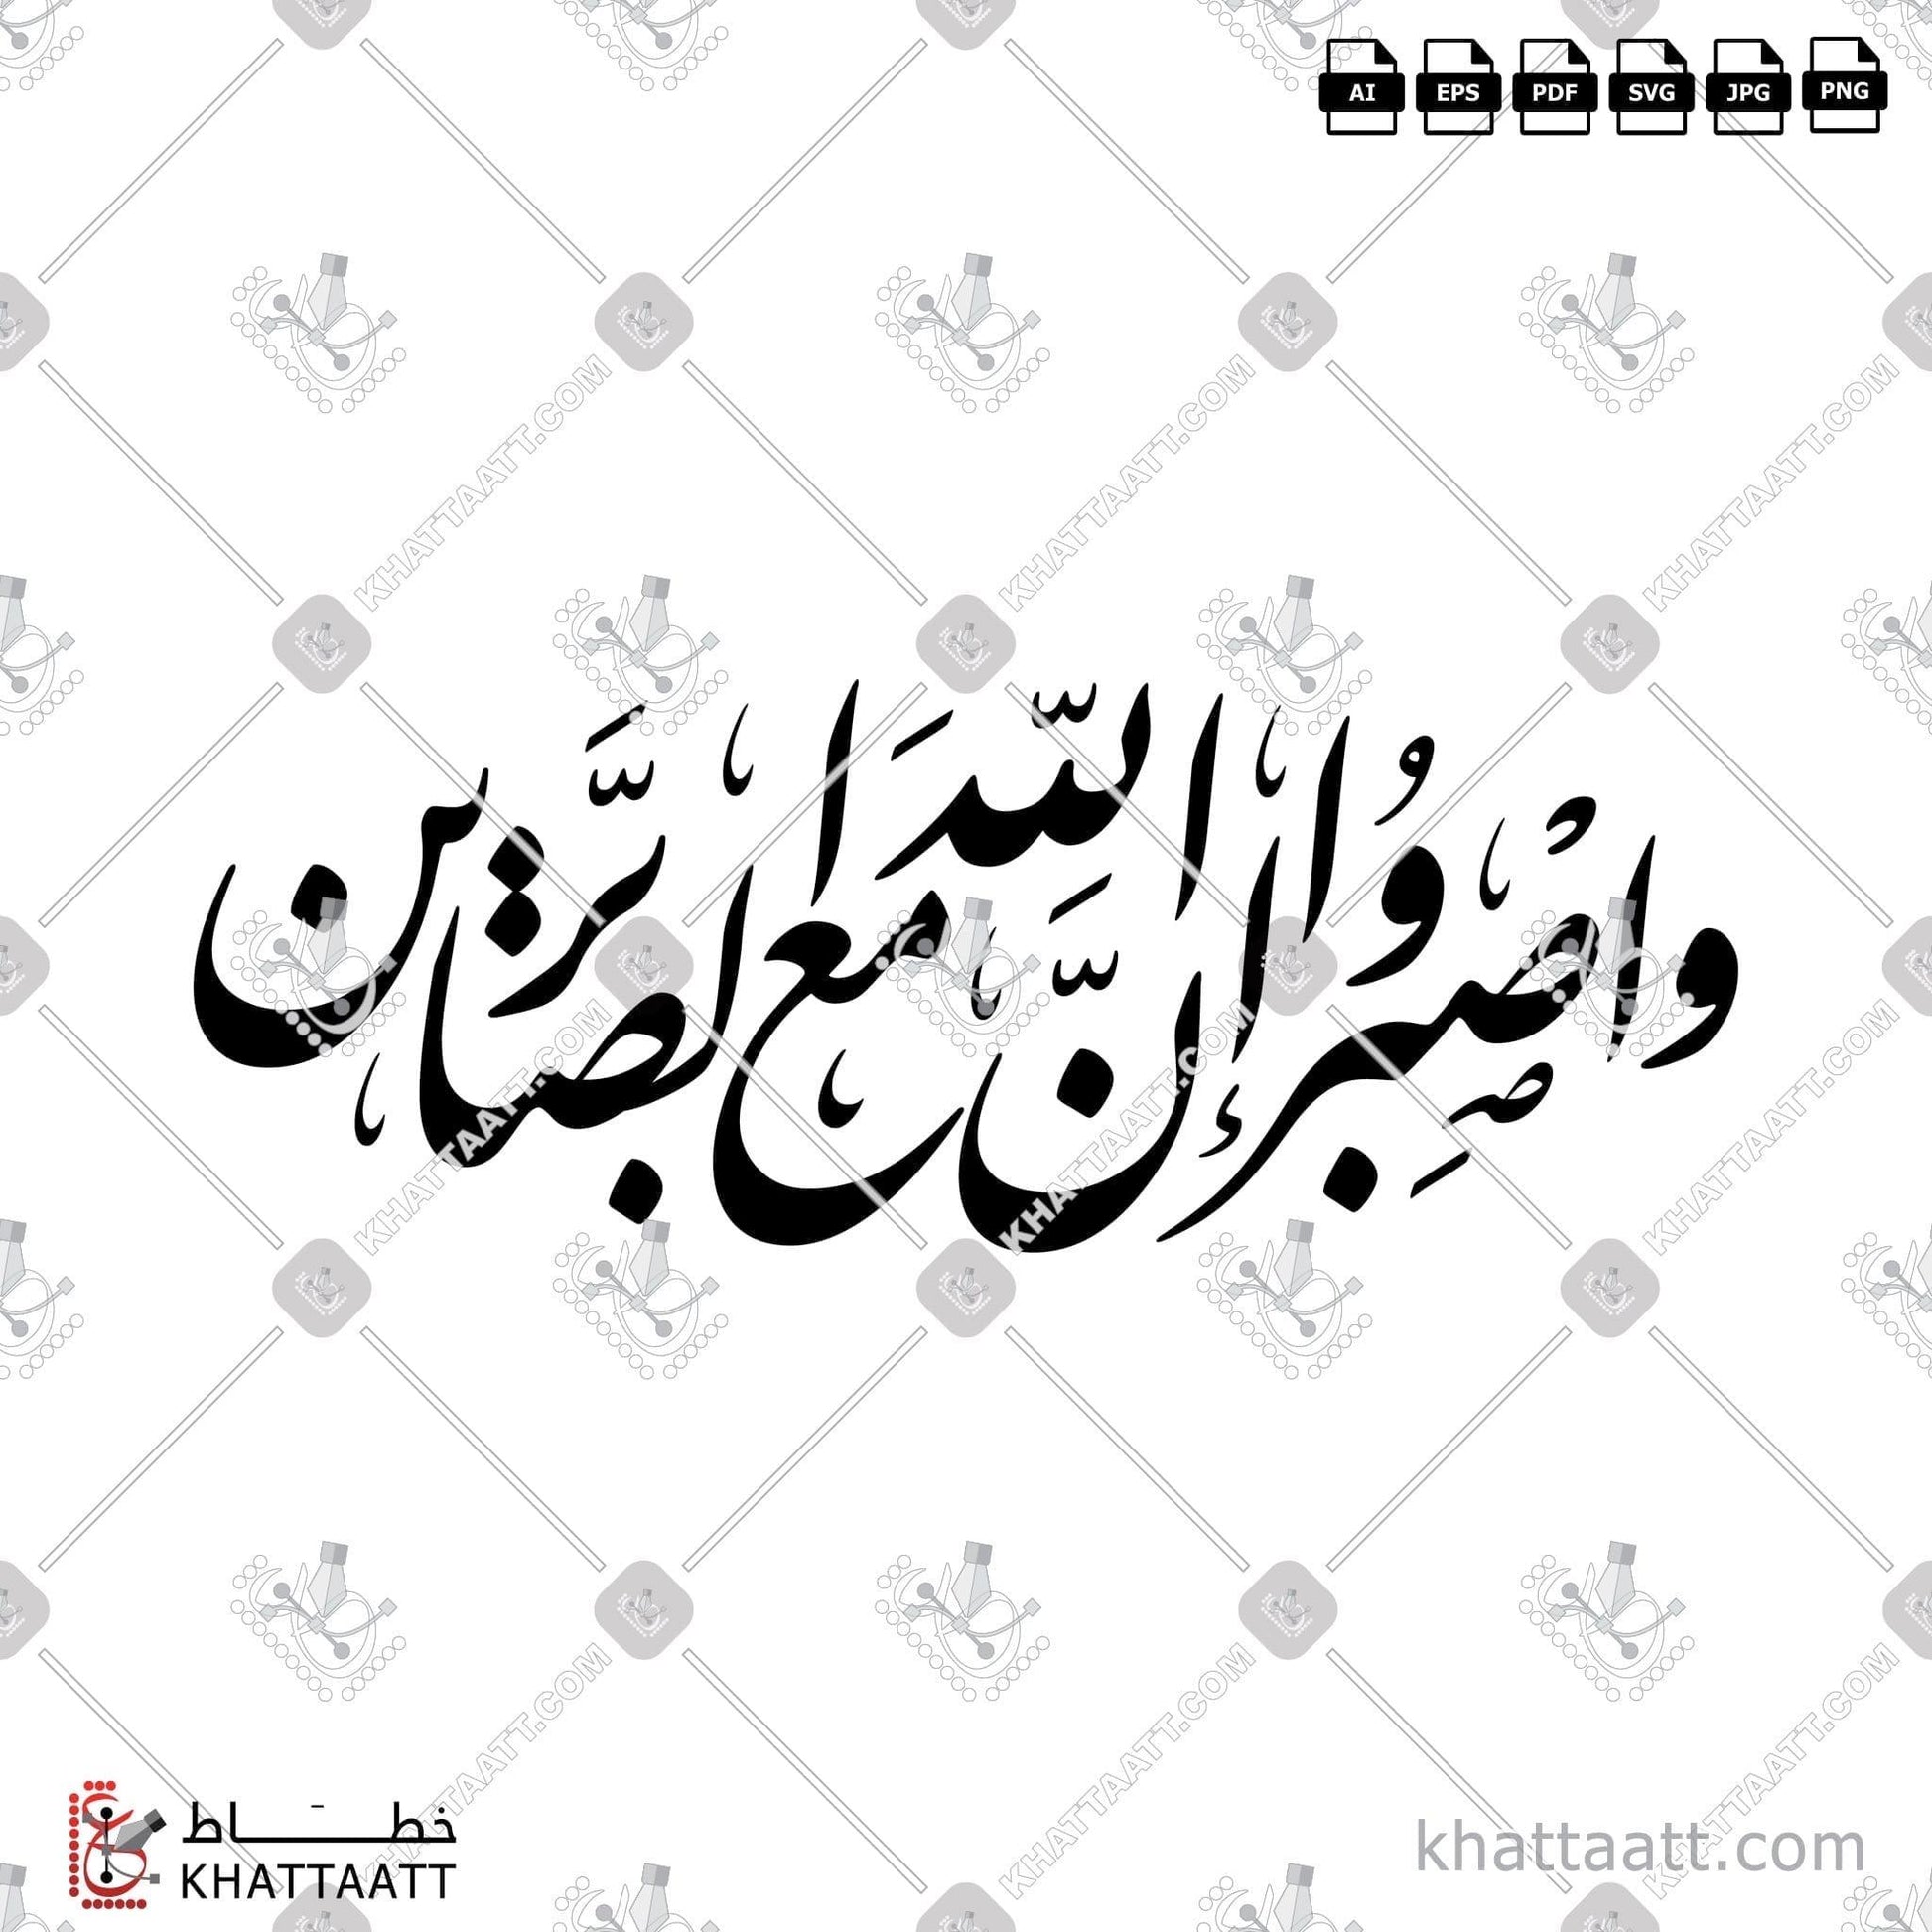 Download Arabic Calligraphy of واصبروا إن الله مع الصابرين in Farsi - الخط الفارسي in vector and .png